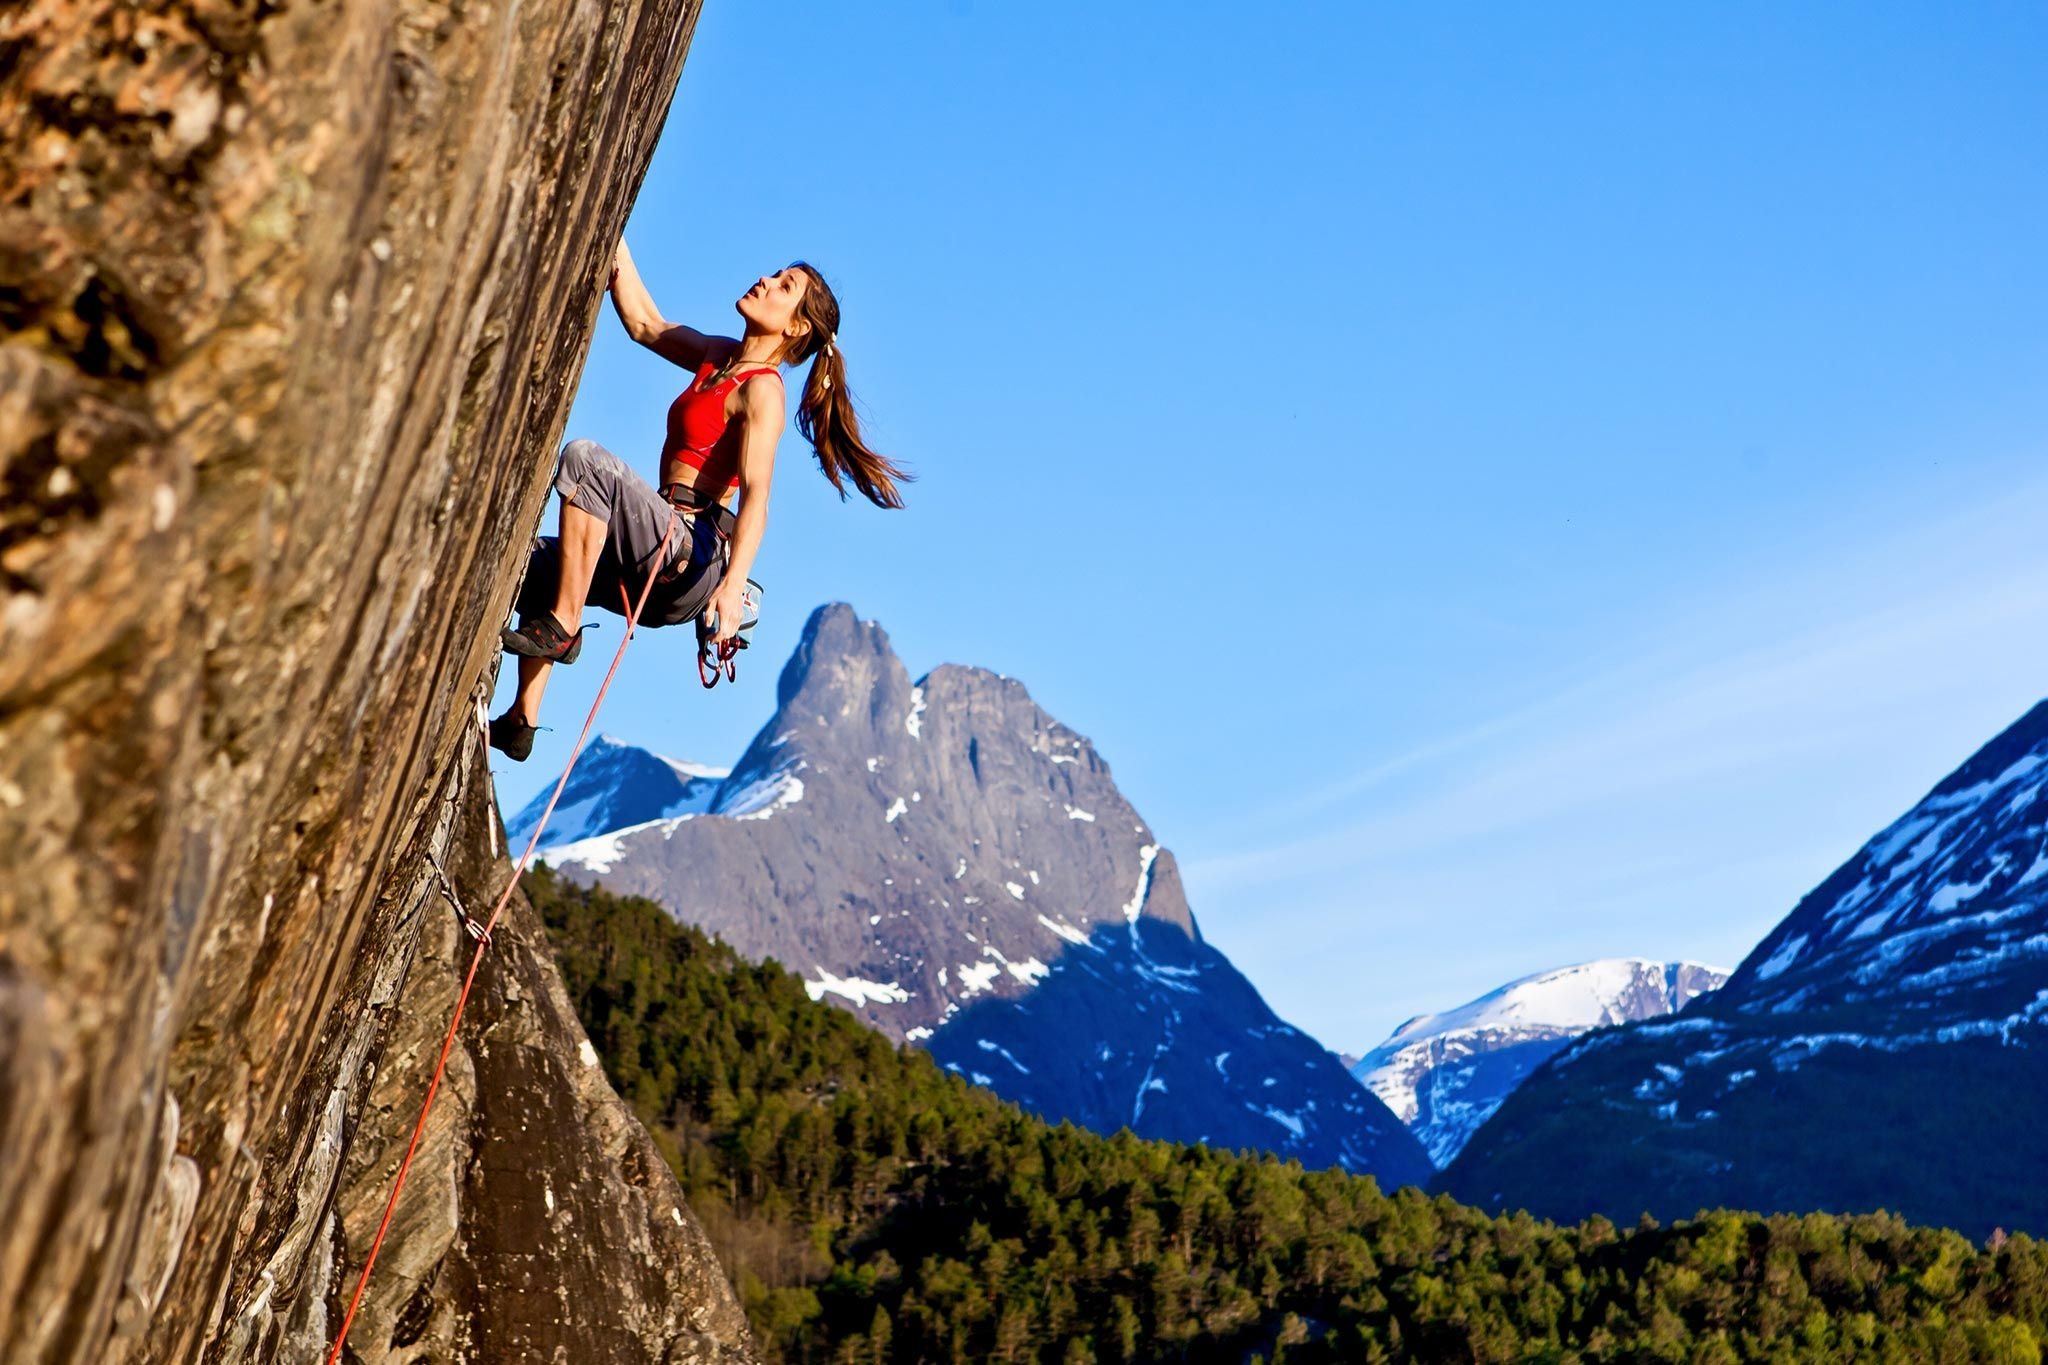 Climb now. Гора и скалолаз. Rock Climbing — скалолазание. Скалолазание девушка гора. Скалолазание мужчины.